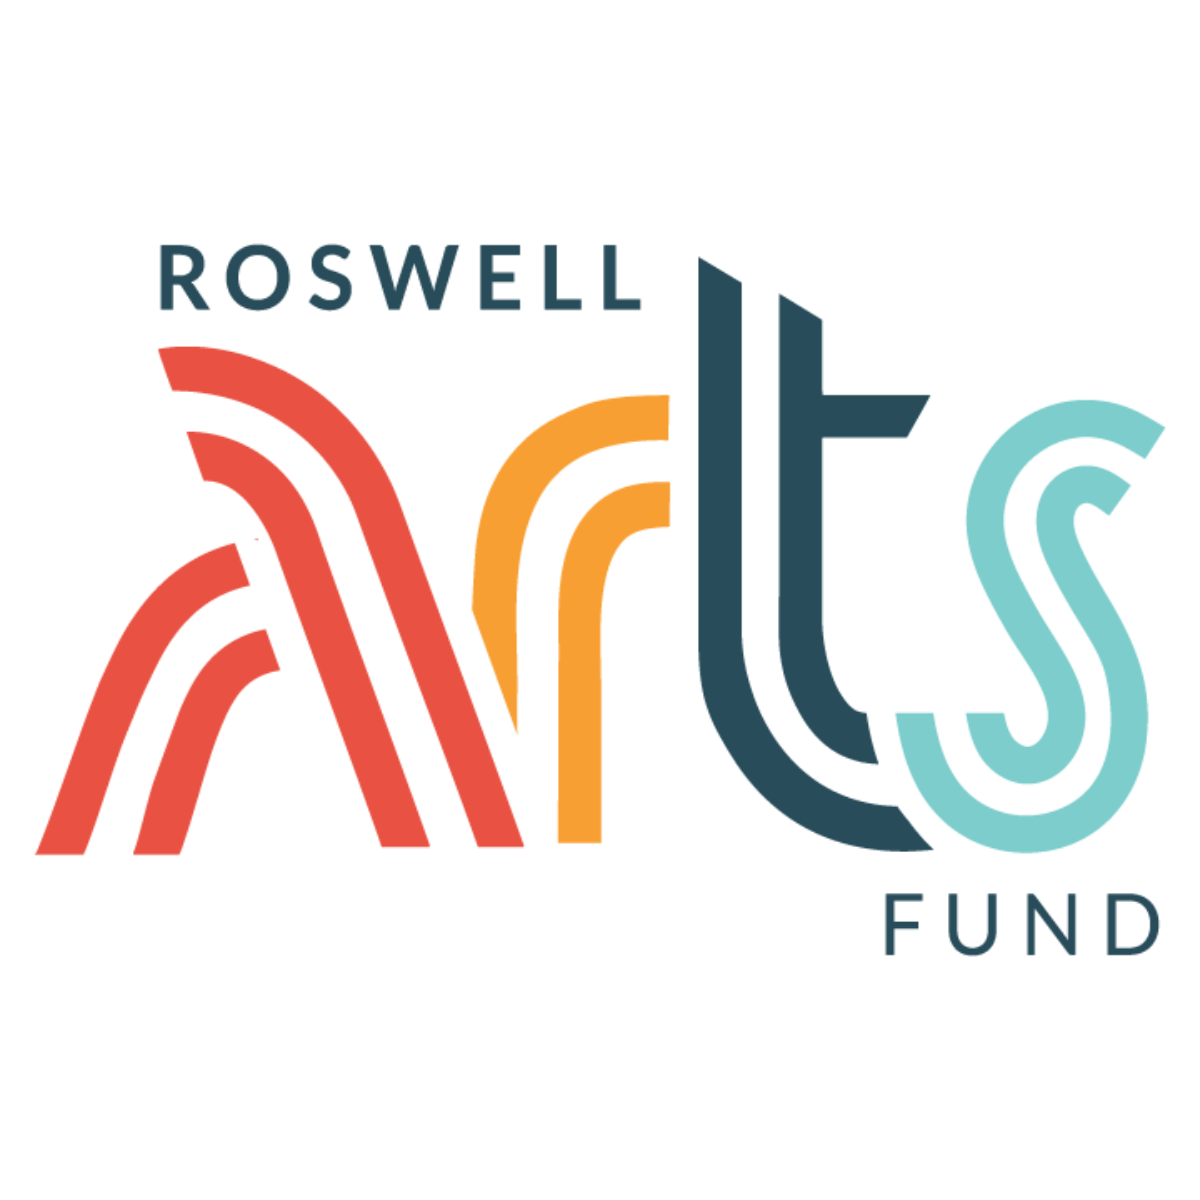 Roswell Arts Fund Advisory Board Members Roswell Arts Fund